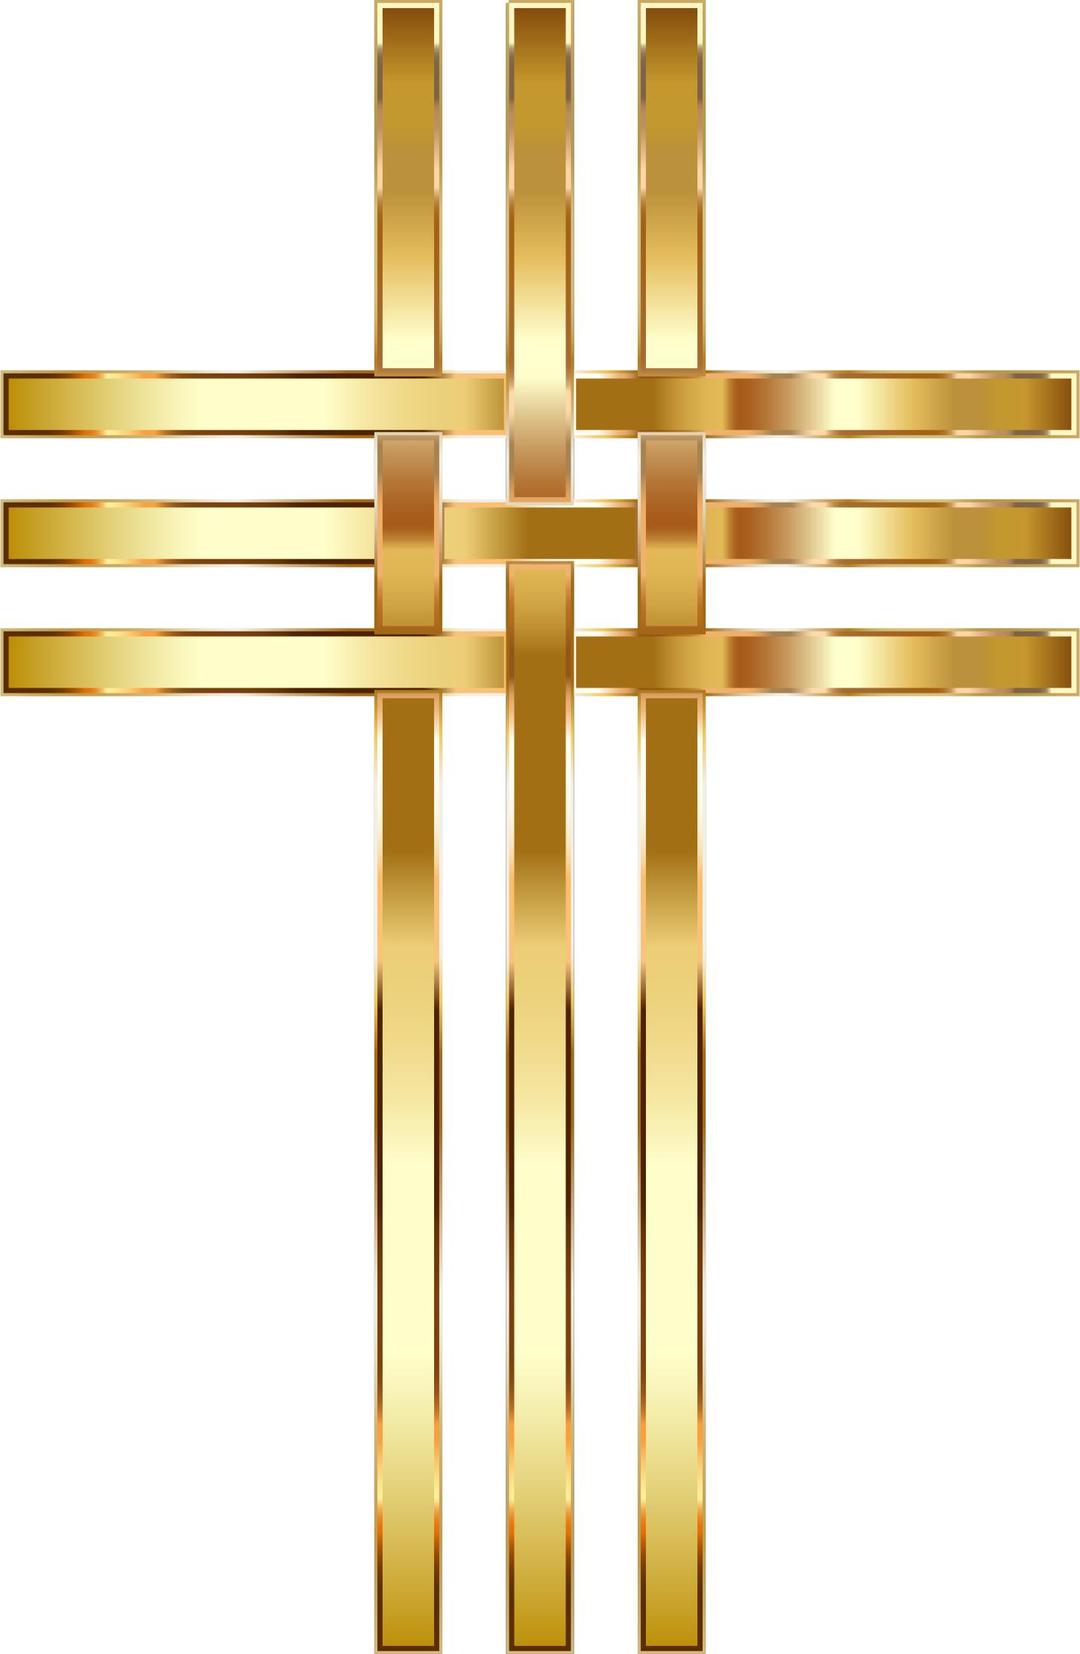 Interlocked Stylized Golden Cross No Background png transparent